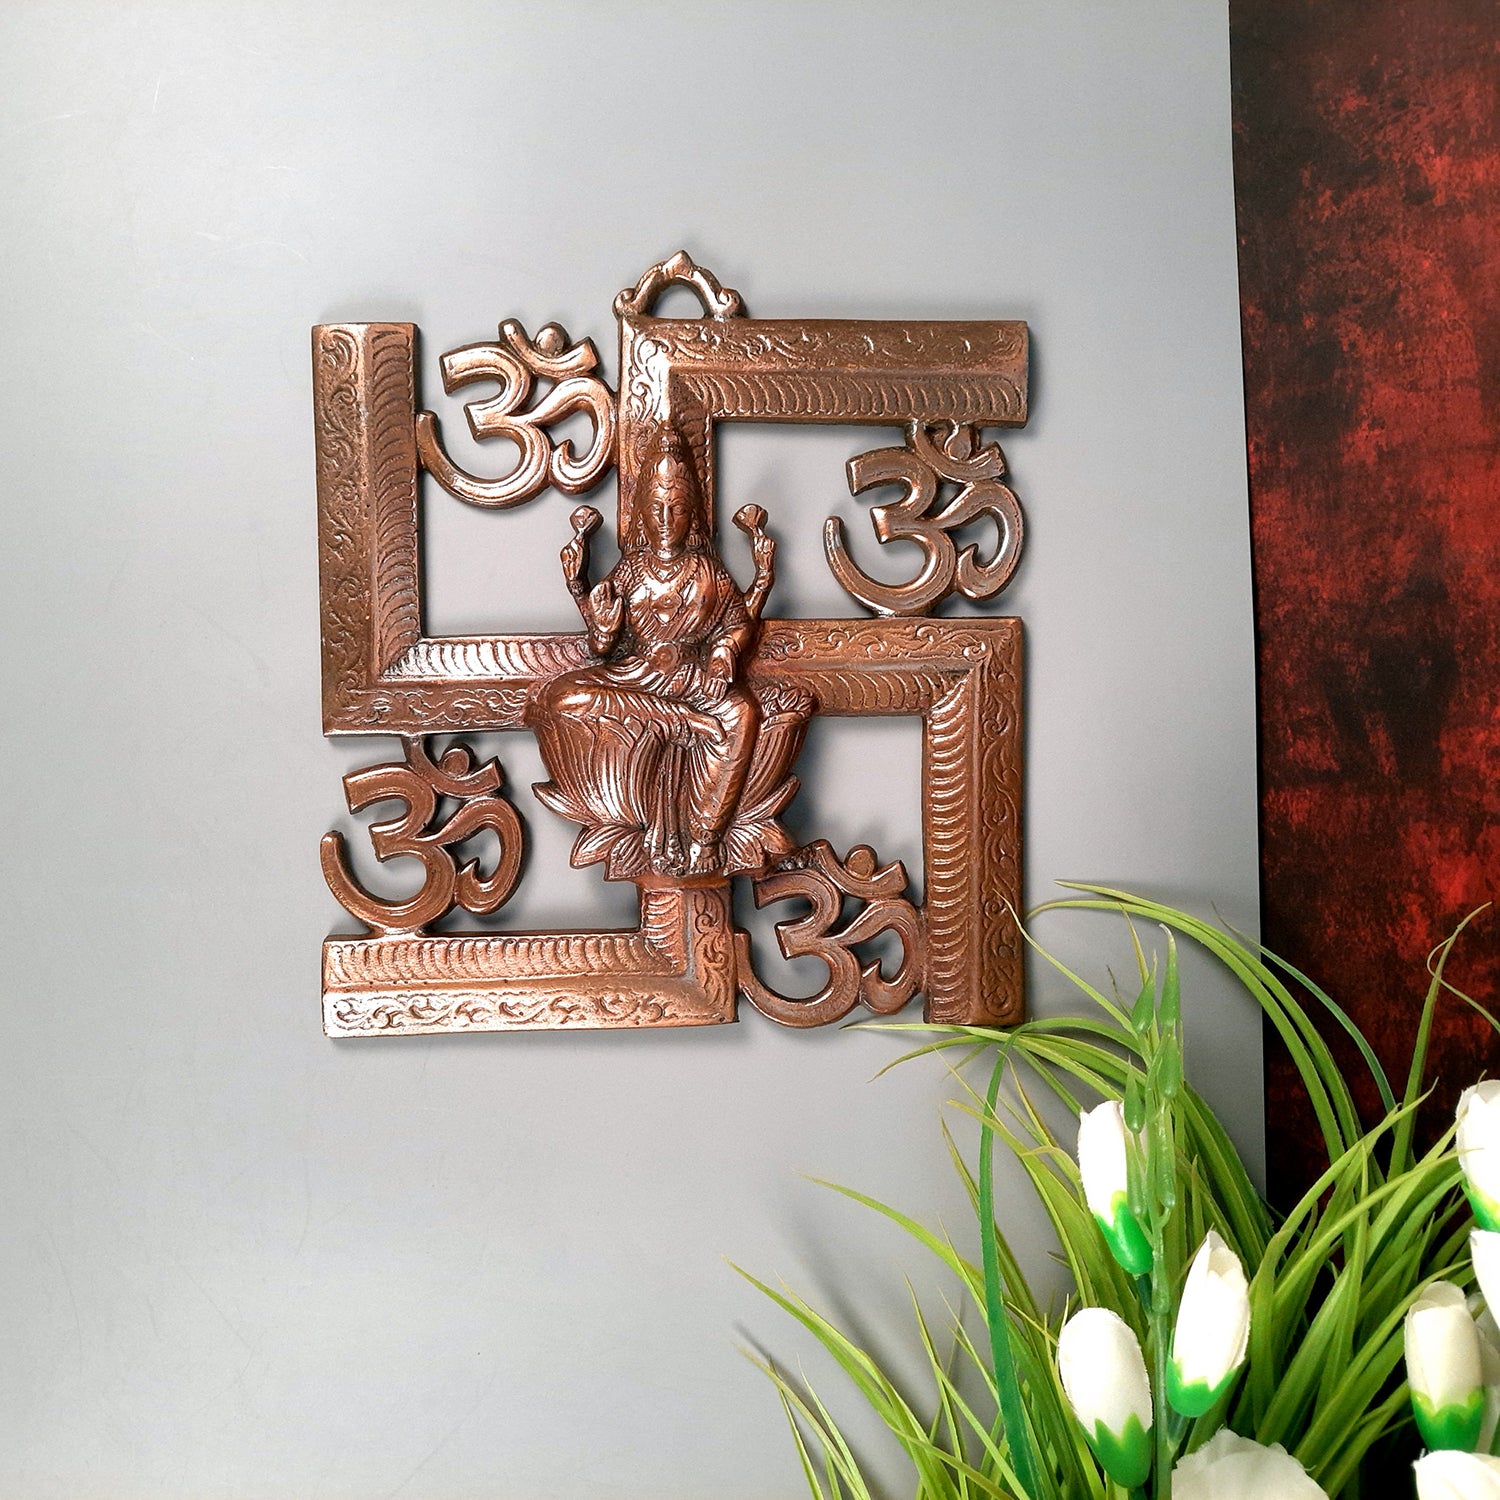 Lakshmi Wall Hanging | Goddess Laxmi Sitting On Lotus With Swastik Design Wall Statue Decor | Religoius & Spiritual Wall Art - For Diwali, Puja, Home & Entrance Living Room & Gift - 10 Inch - Apkamart